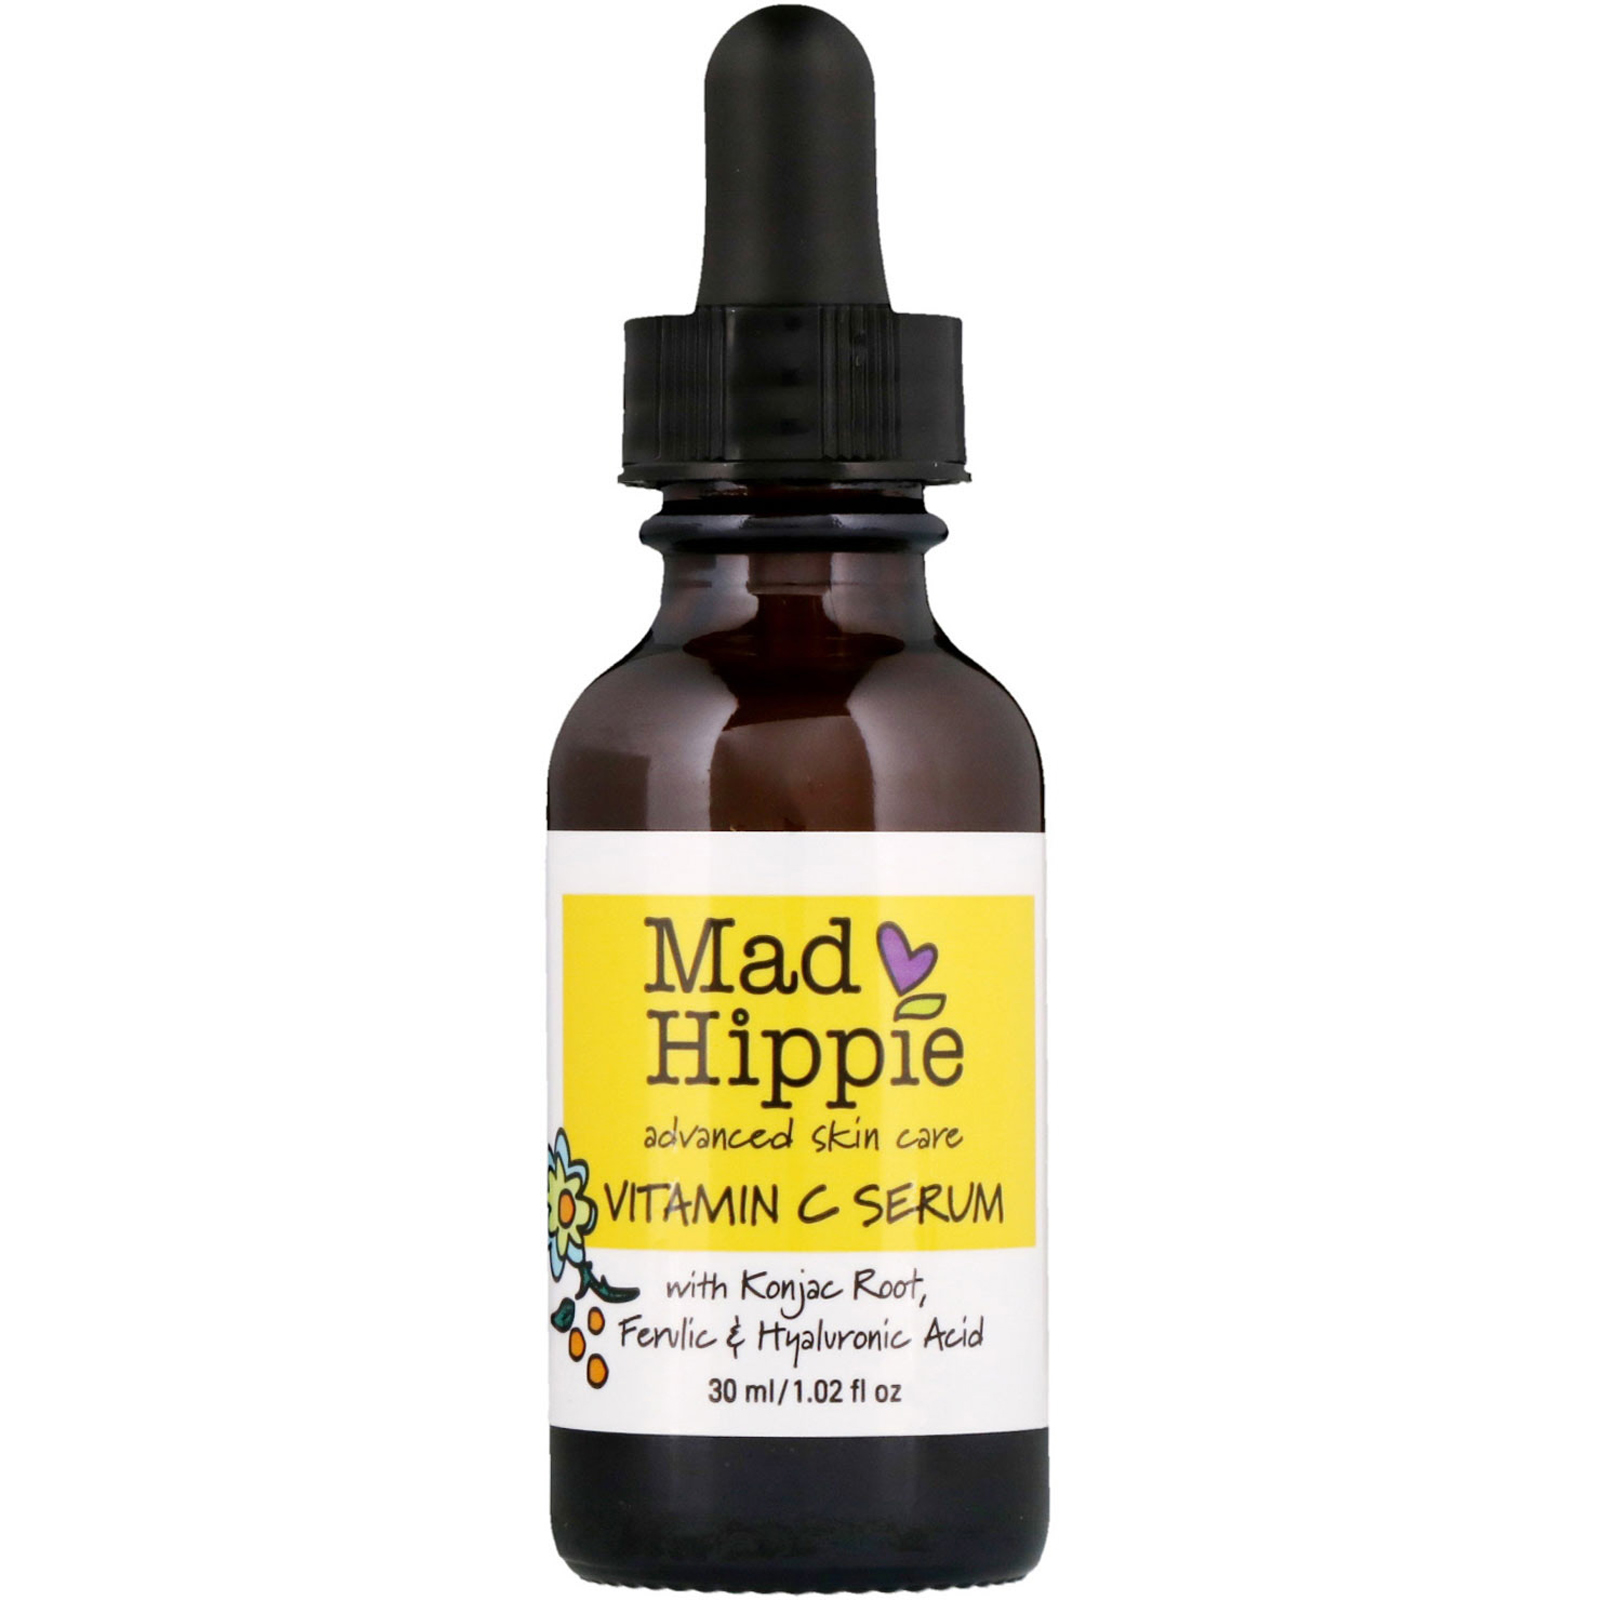 Mad Hippie Skin Care Products, Сыворотка витамина С, 8 активных веществ, 1,02 жидких унции (30 мл)